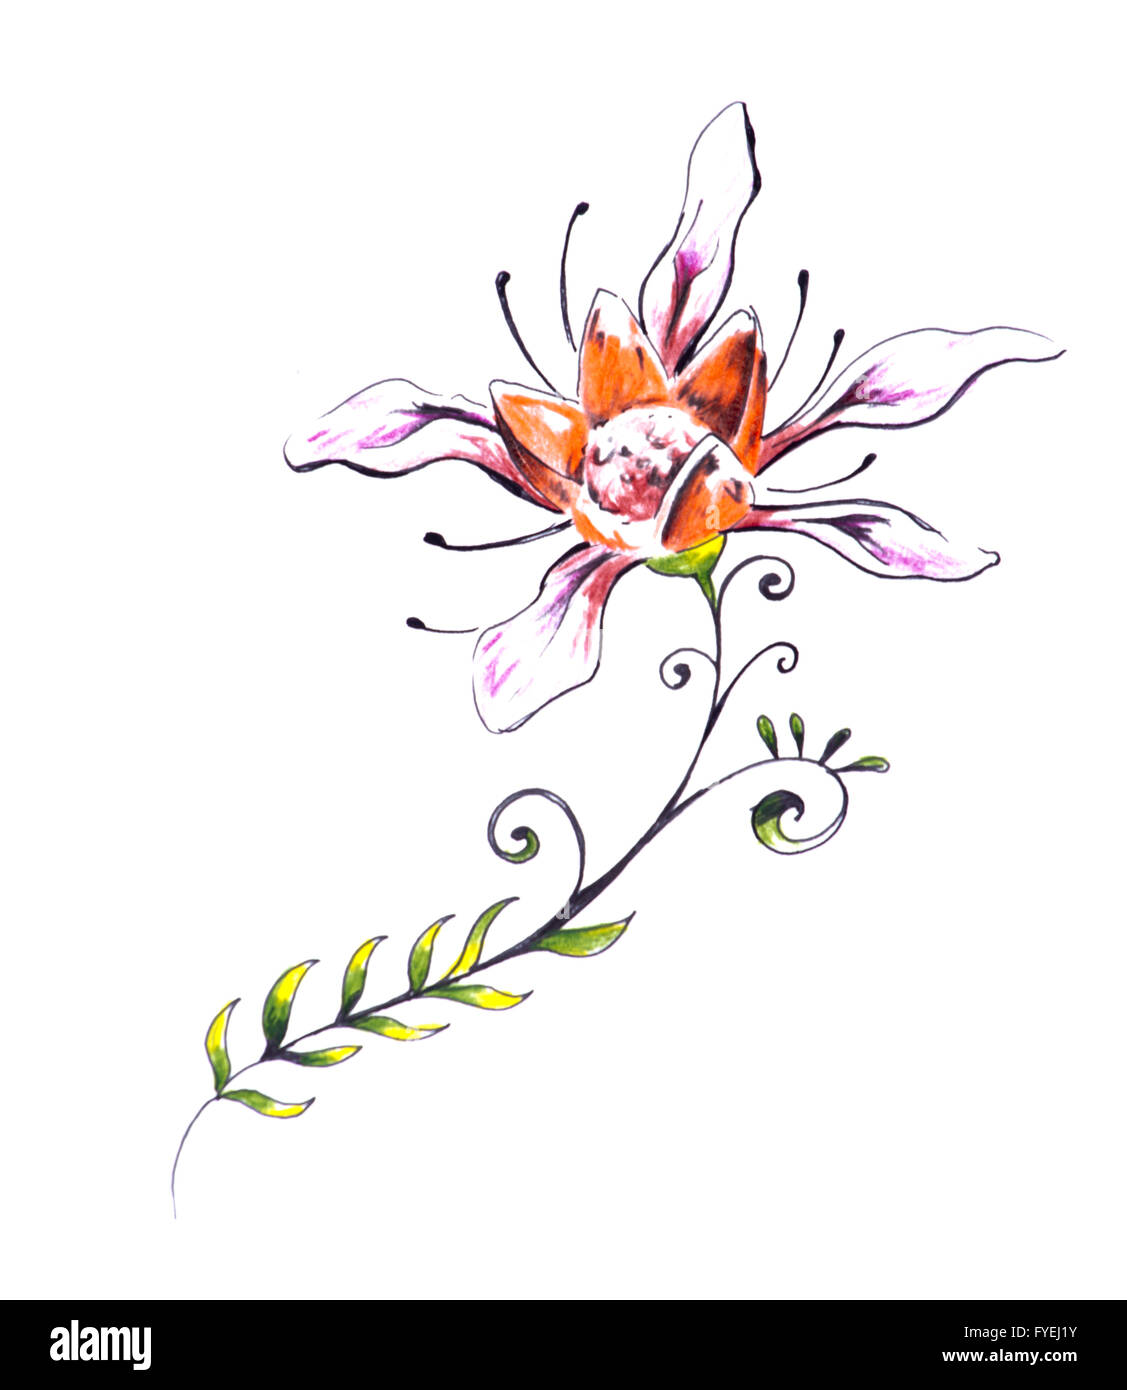 Sketch of tattoo art, flower with tribal design Stock Photo - Alamy